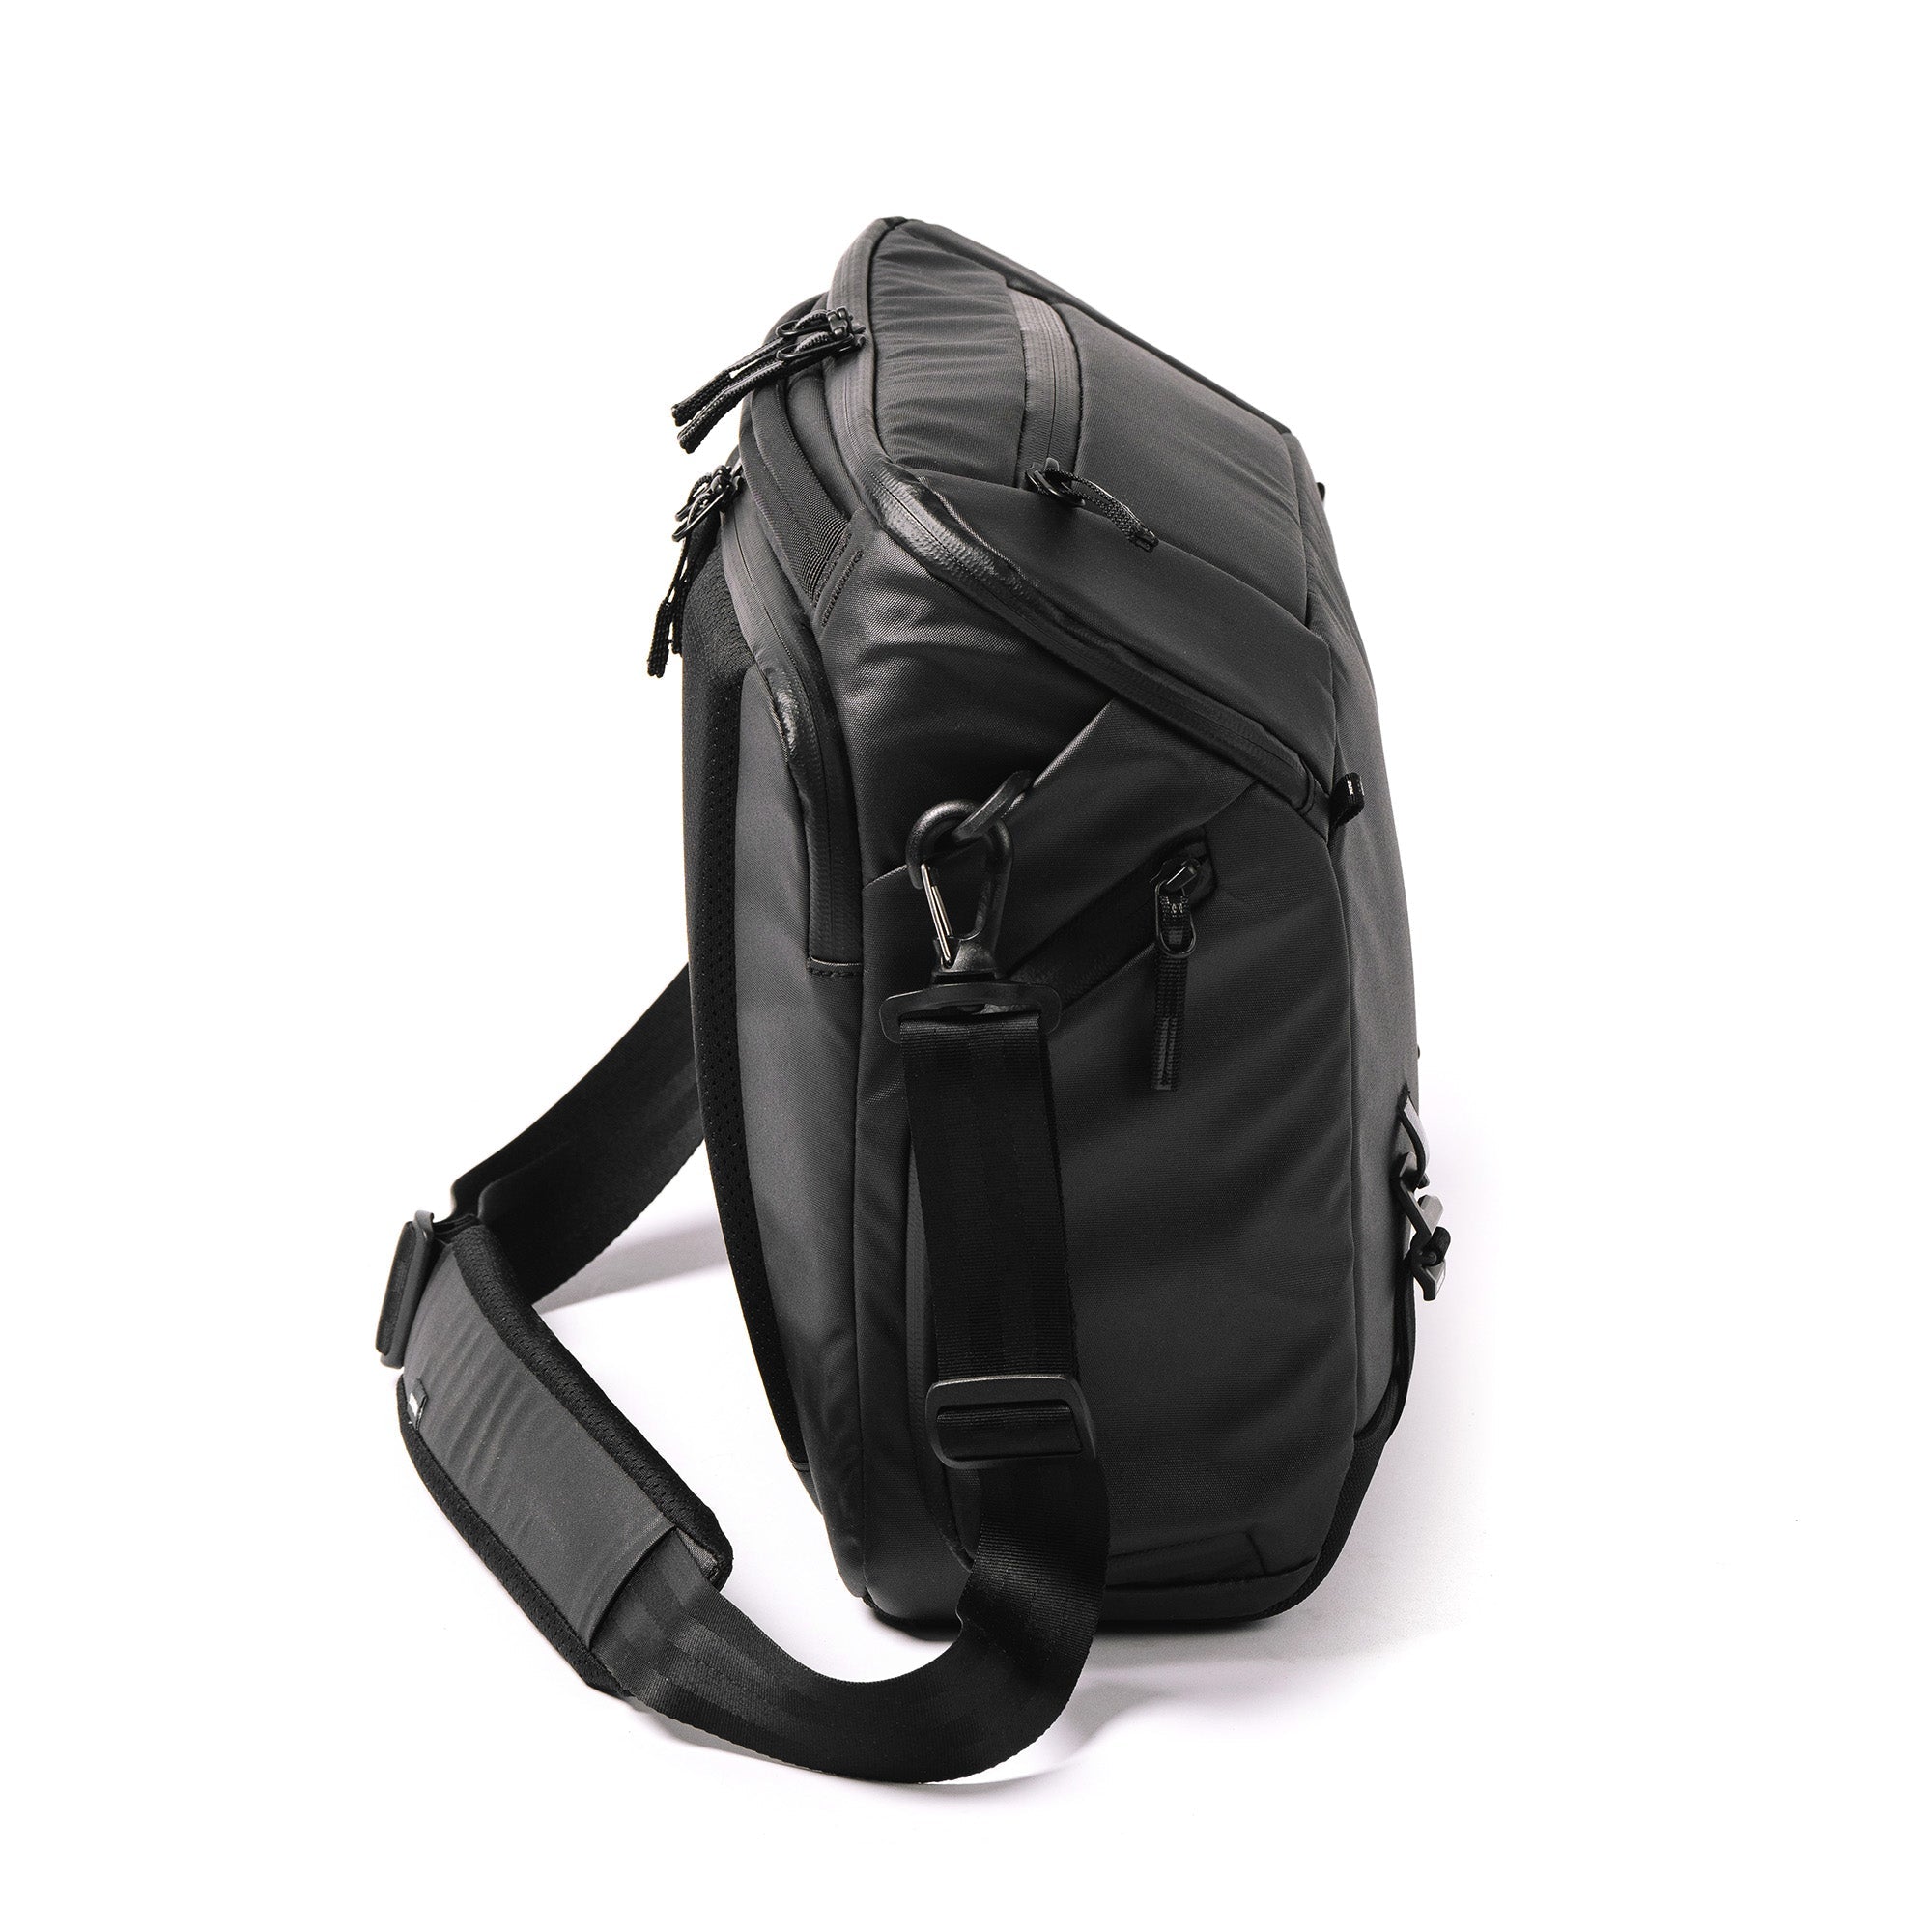 Kompakt, leicht und komplett gepolstert: die Nanuk N-PVD Messenger Bag